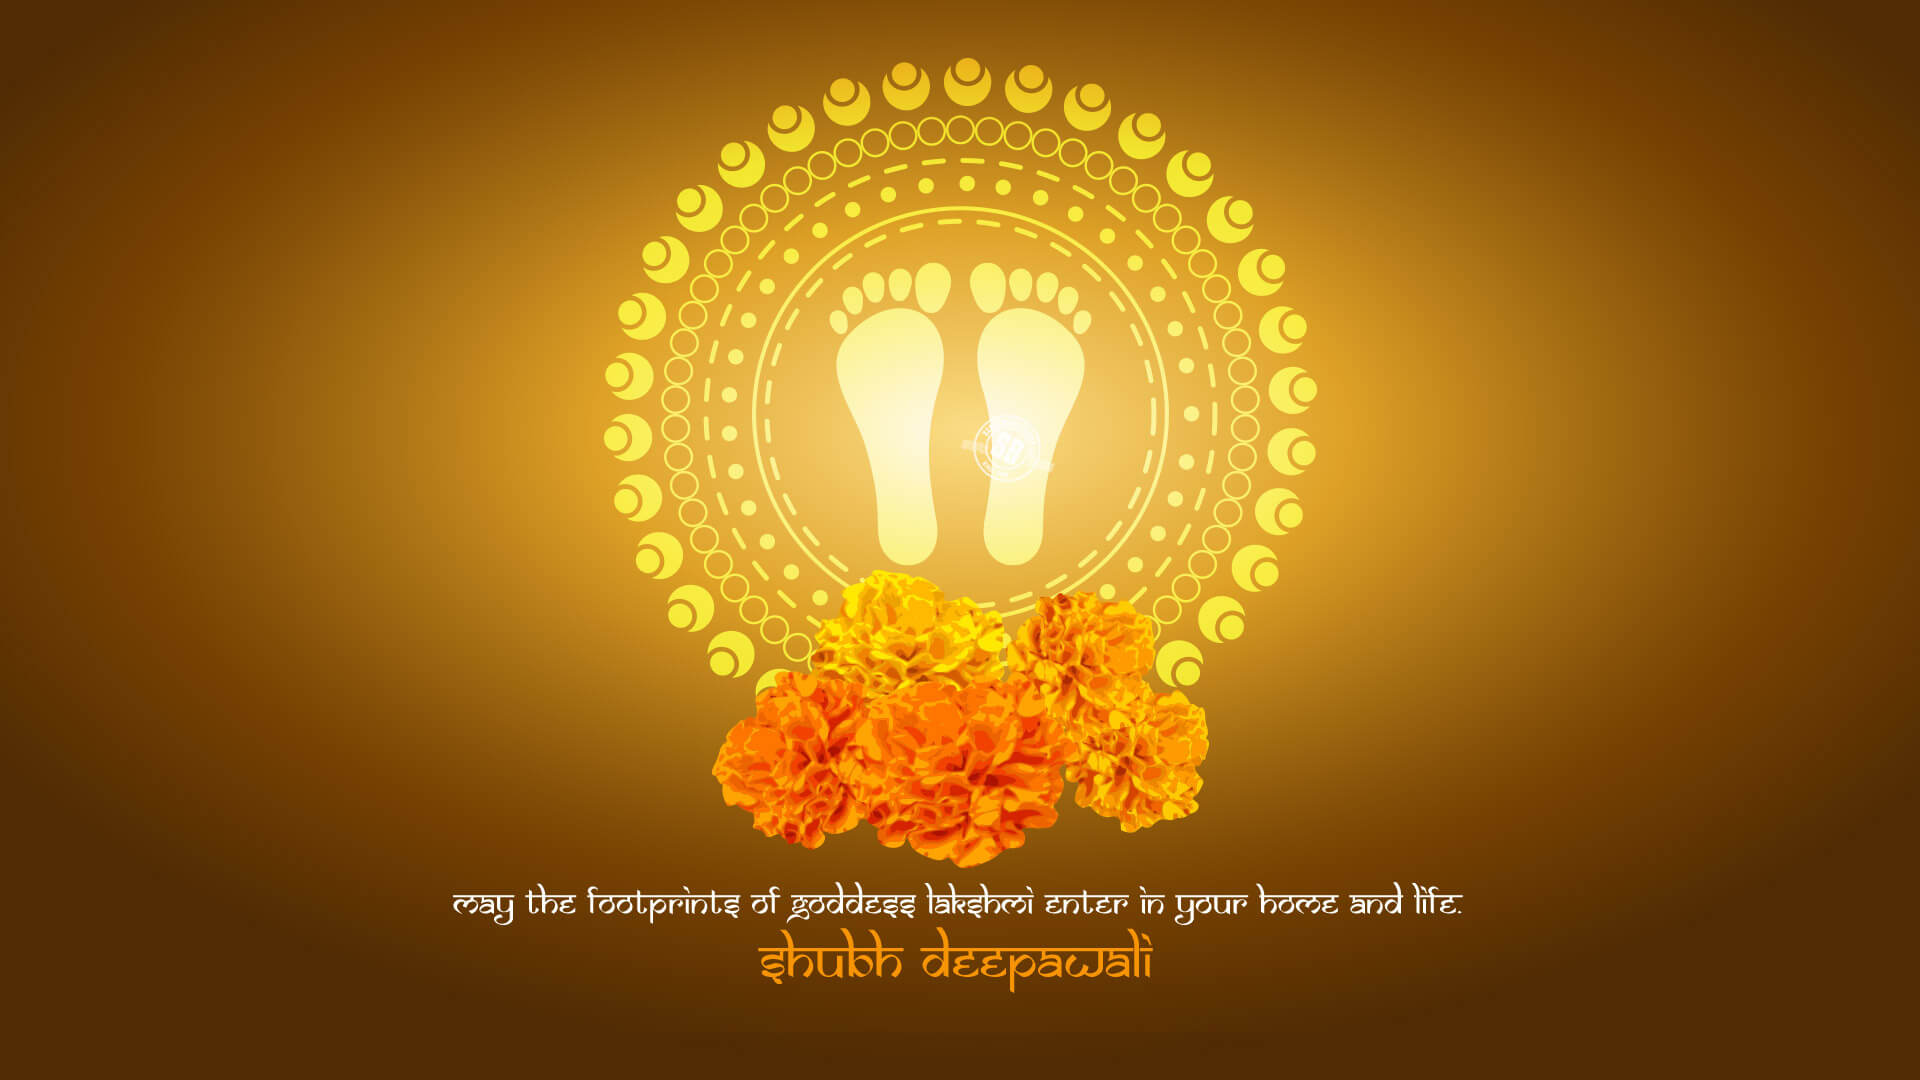 Download-Happy-Diwali-2015-HD-Wallpapers-facebook-mobile-desktop-cgfrog-26